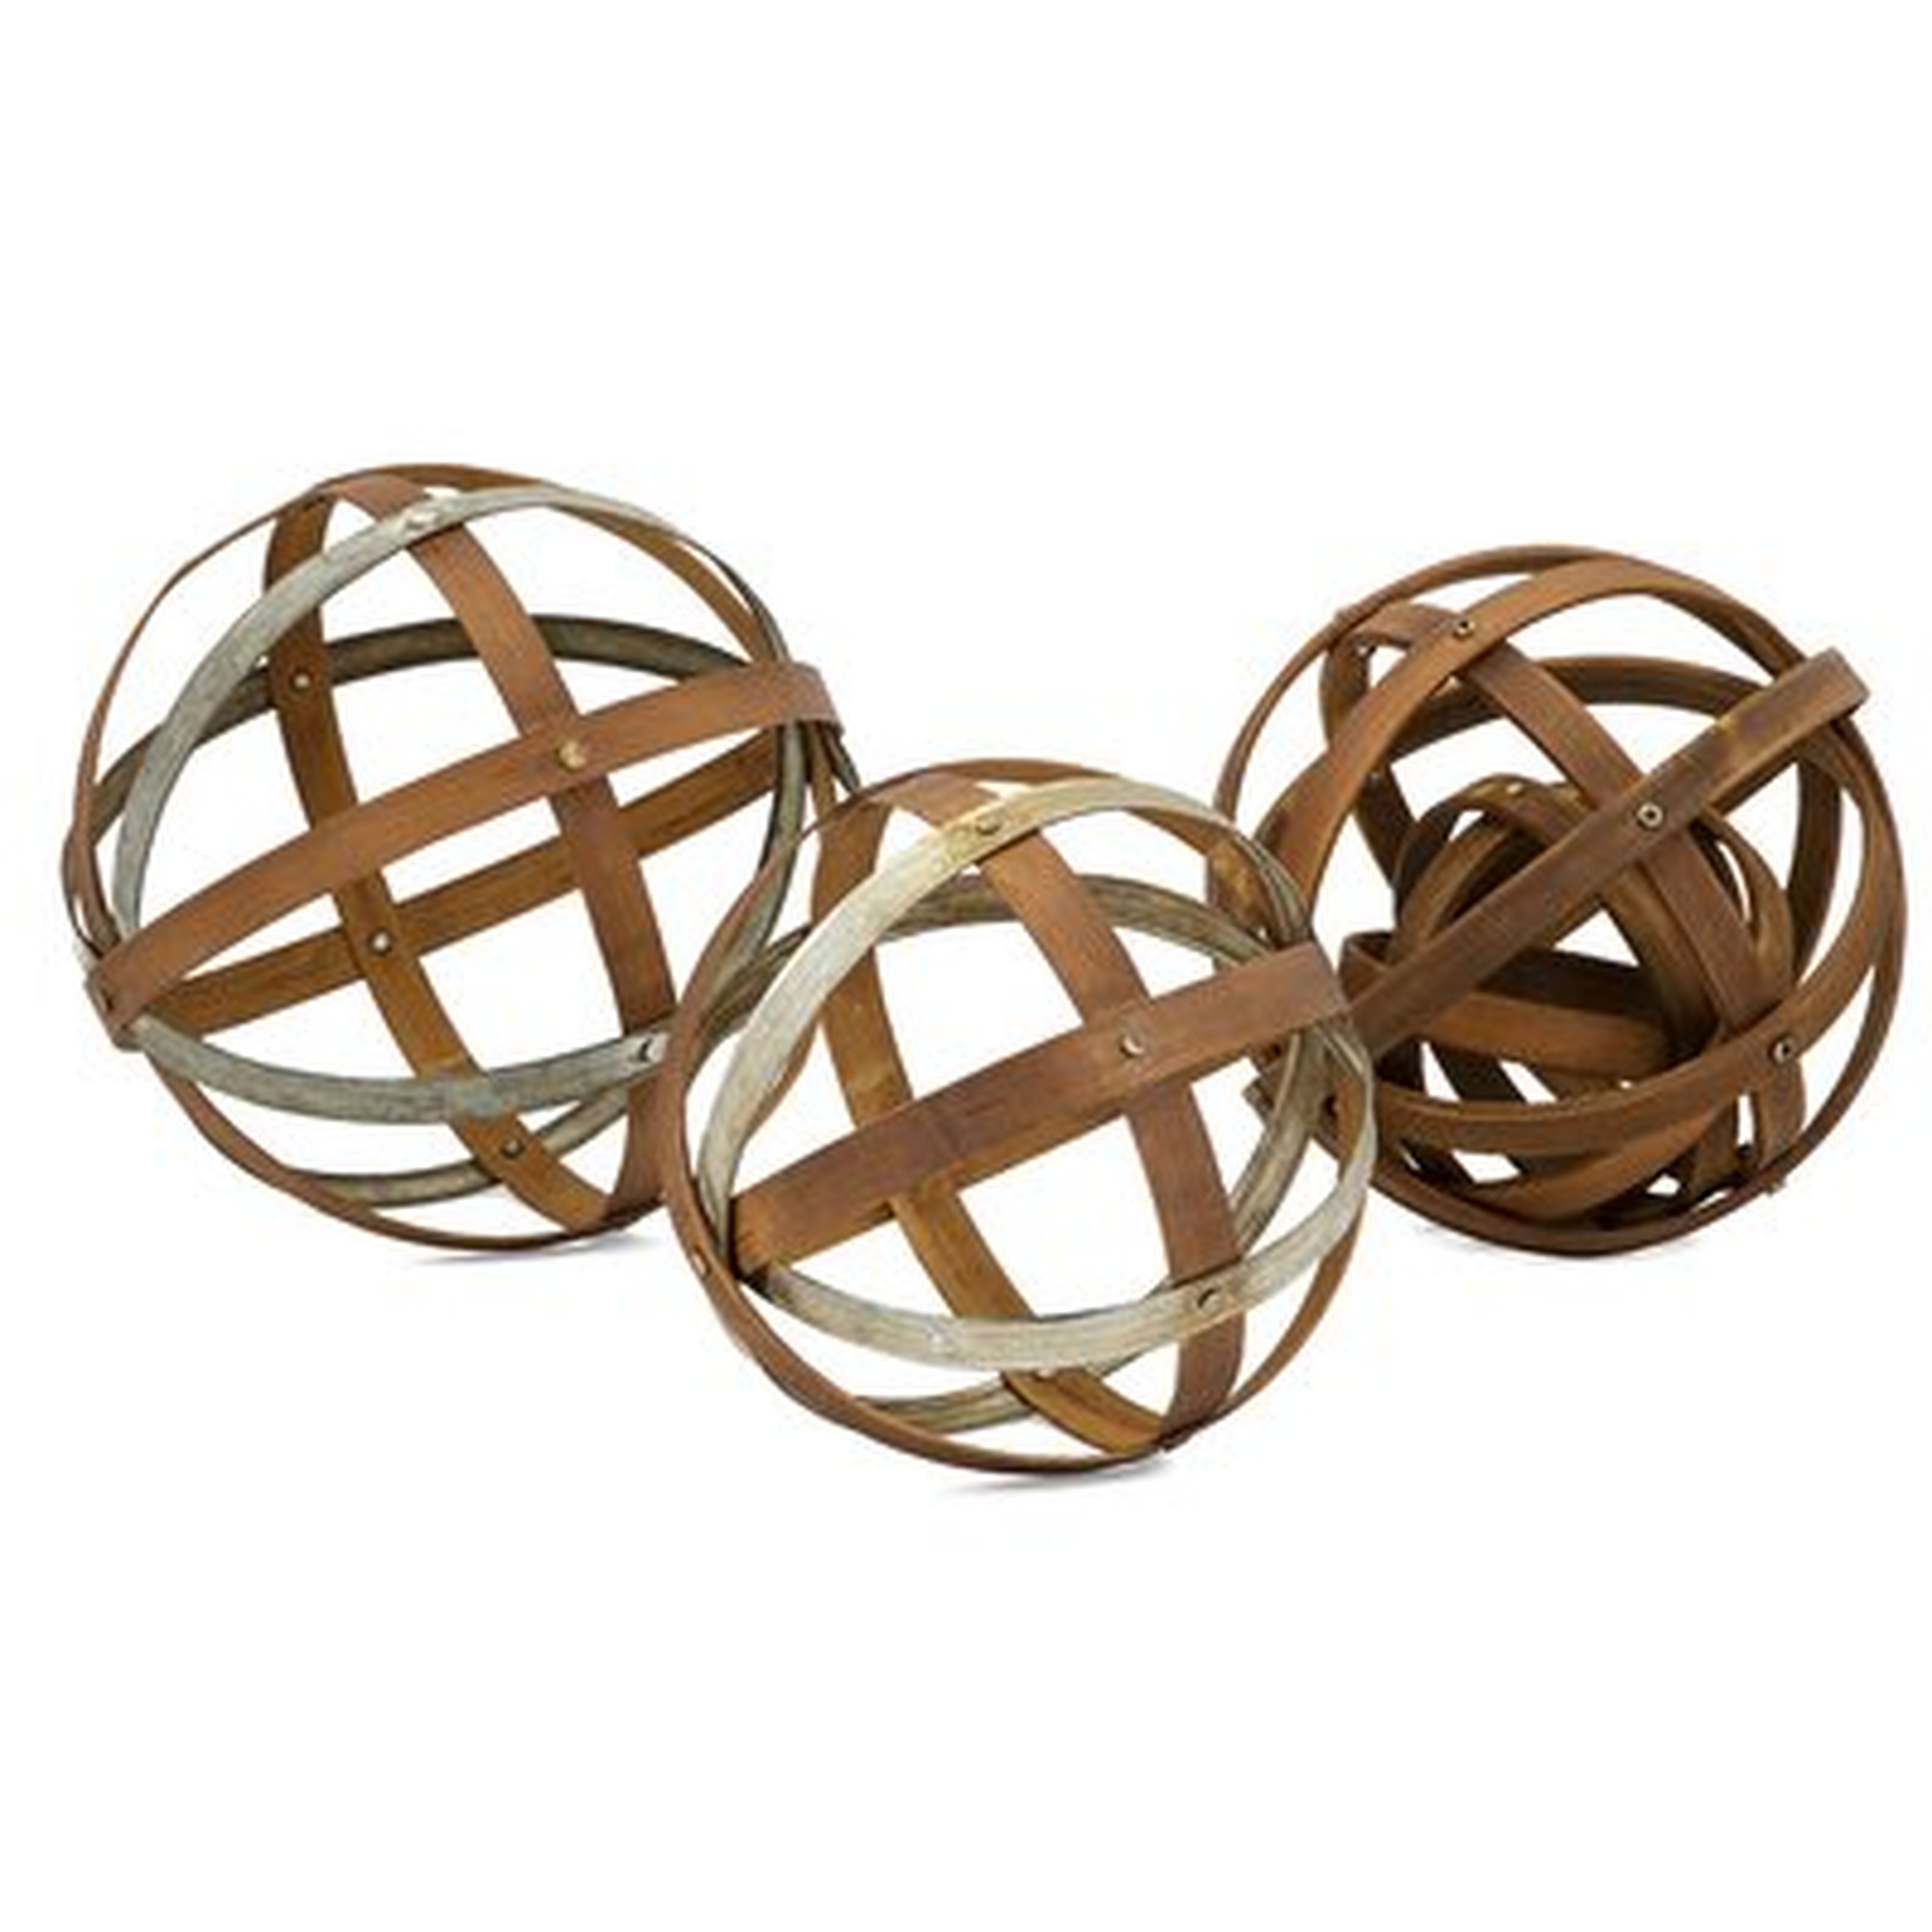 Wood and Metal Spheres 3 Piece Sculpture Set - AllModern